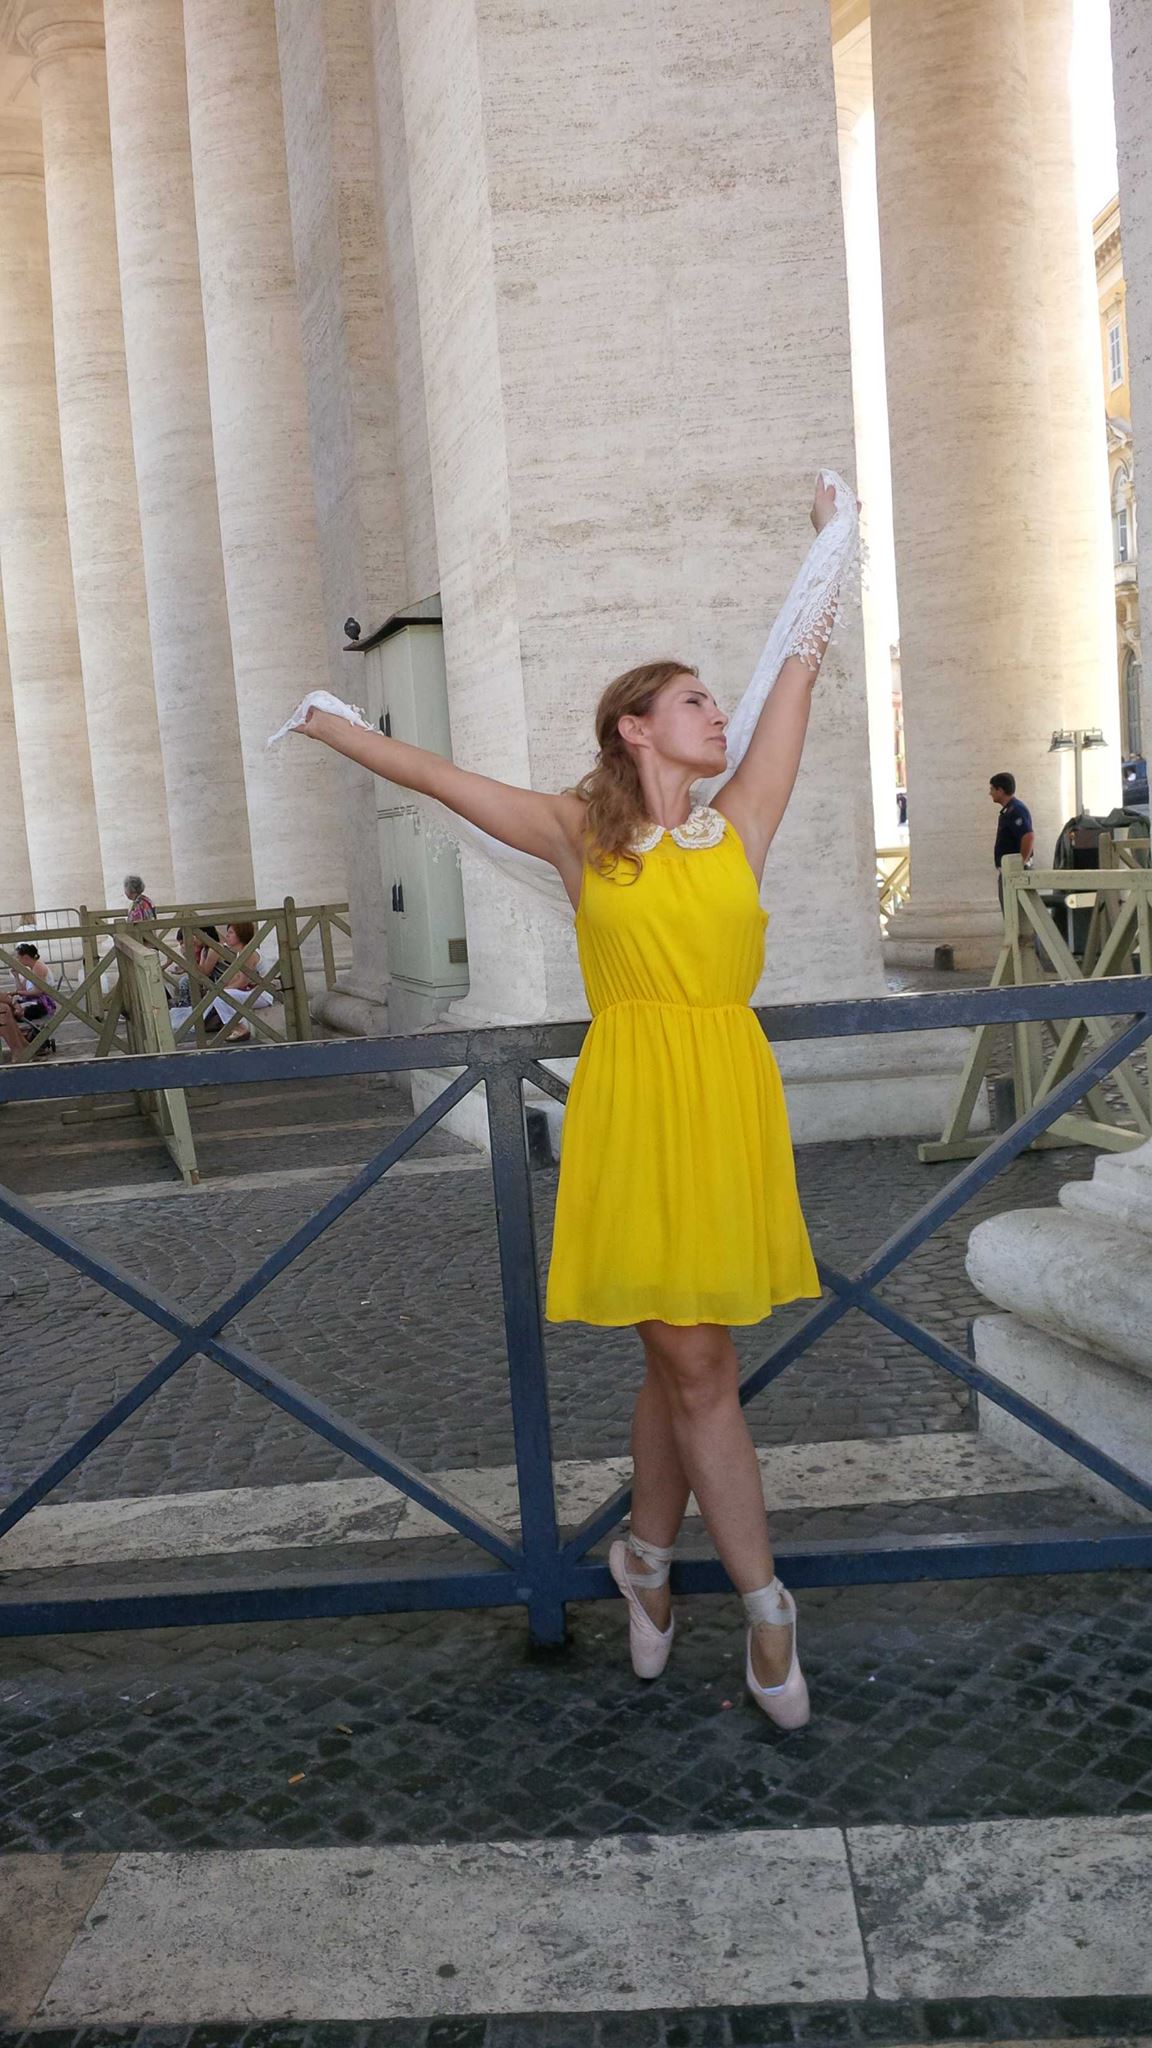 Dance in the public space: Vatican